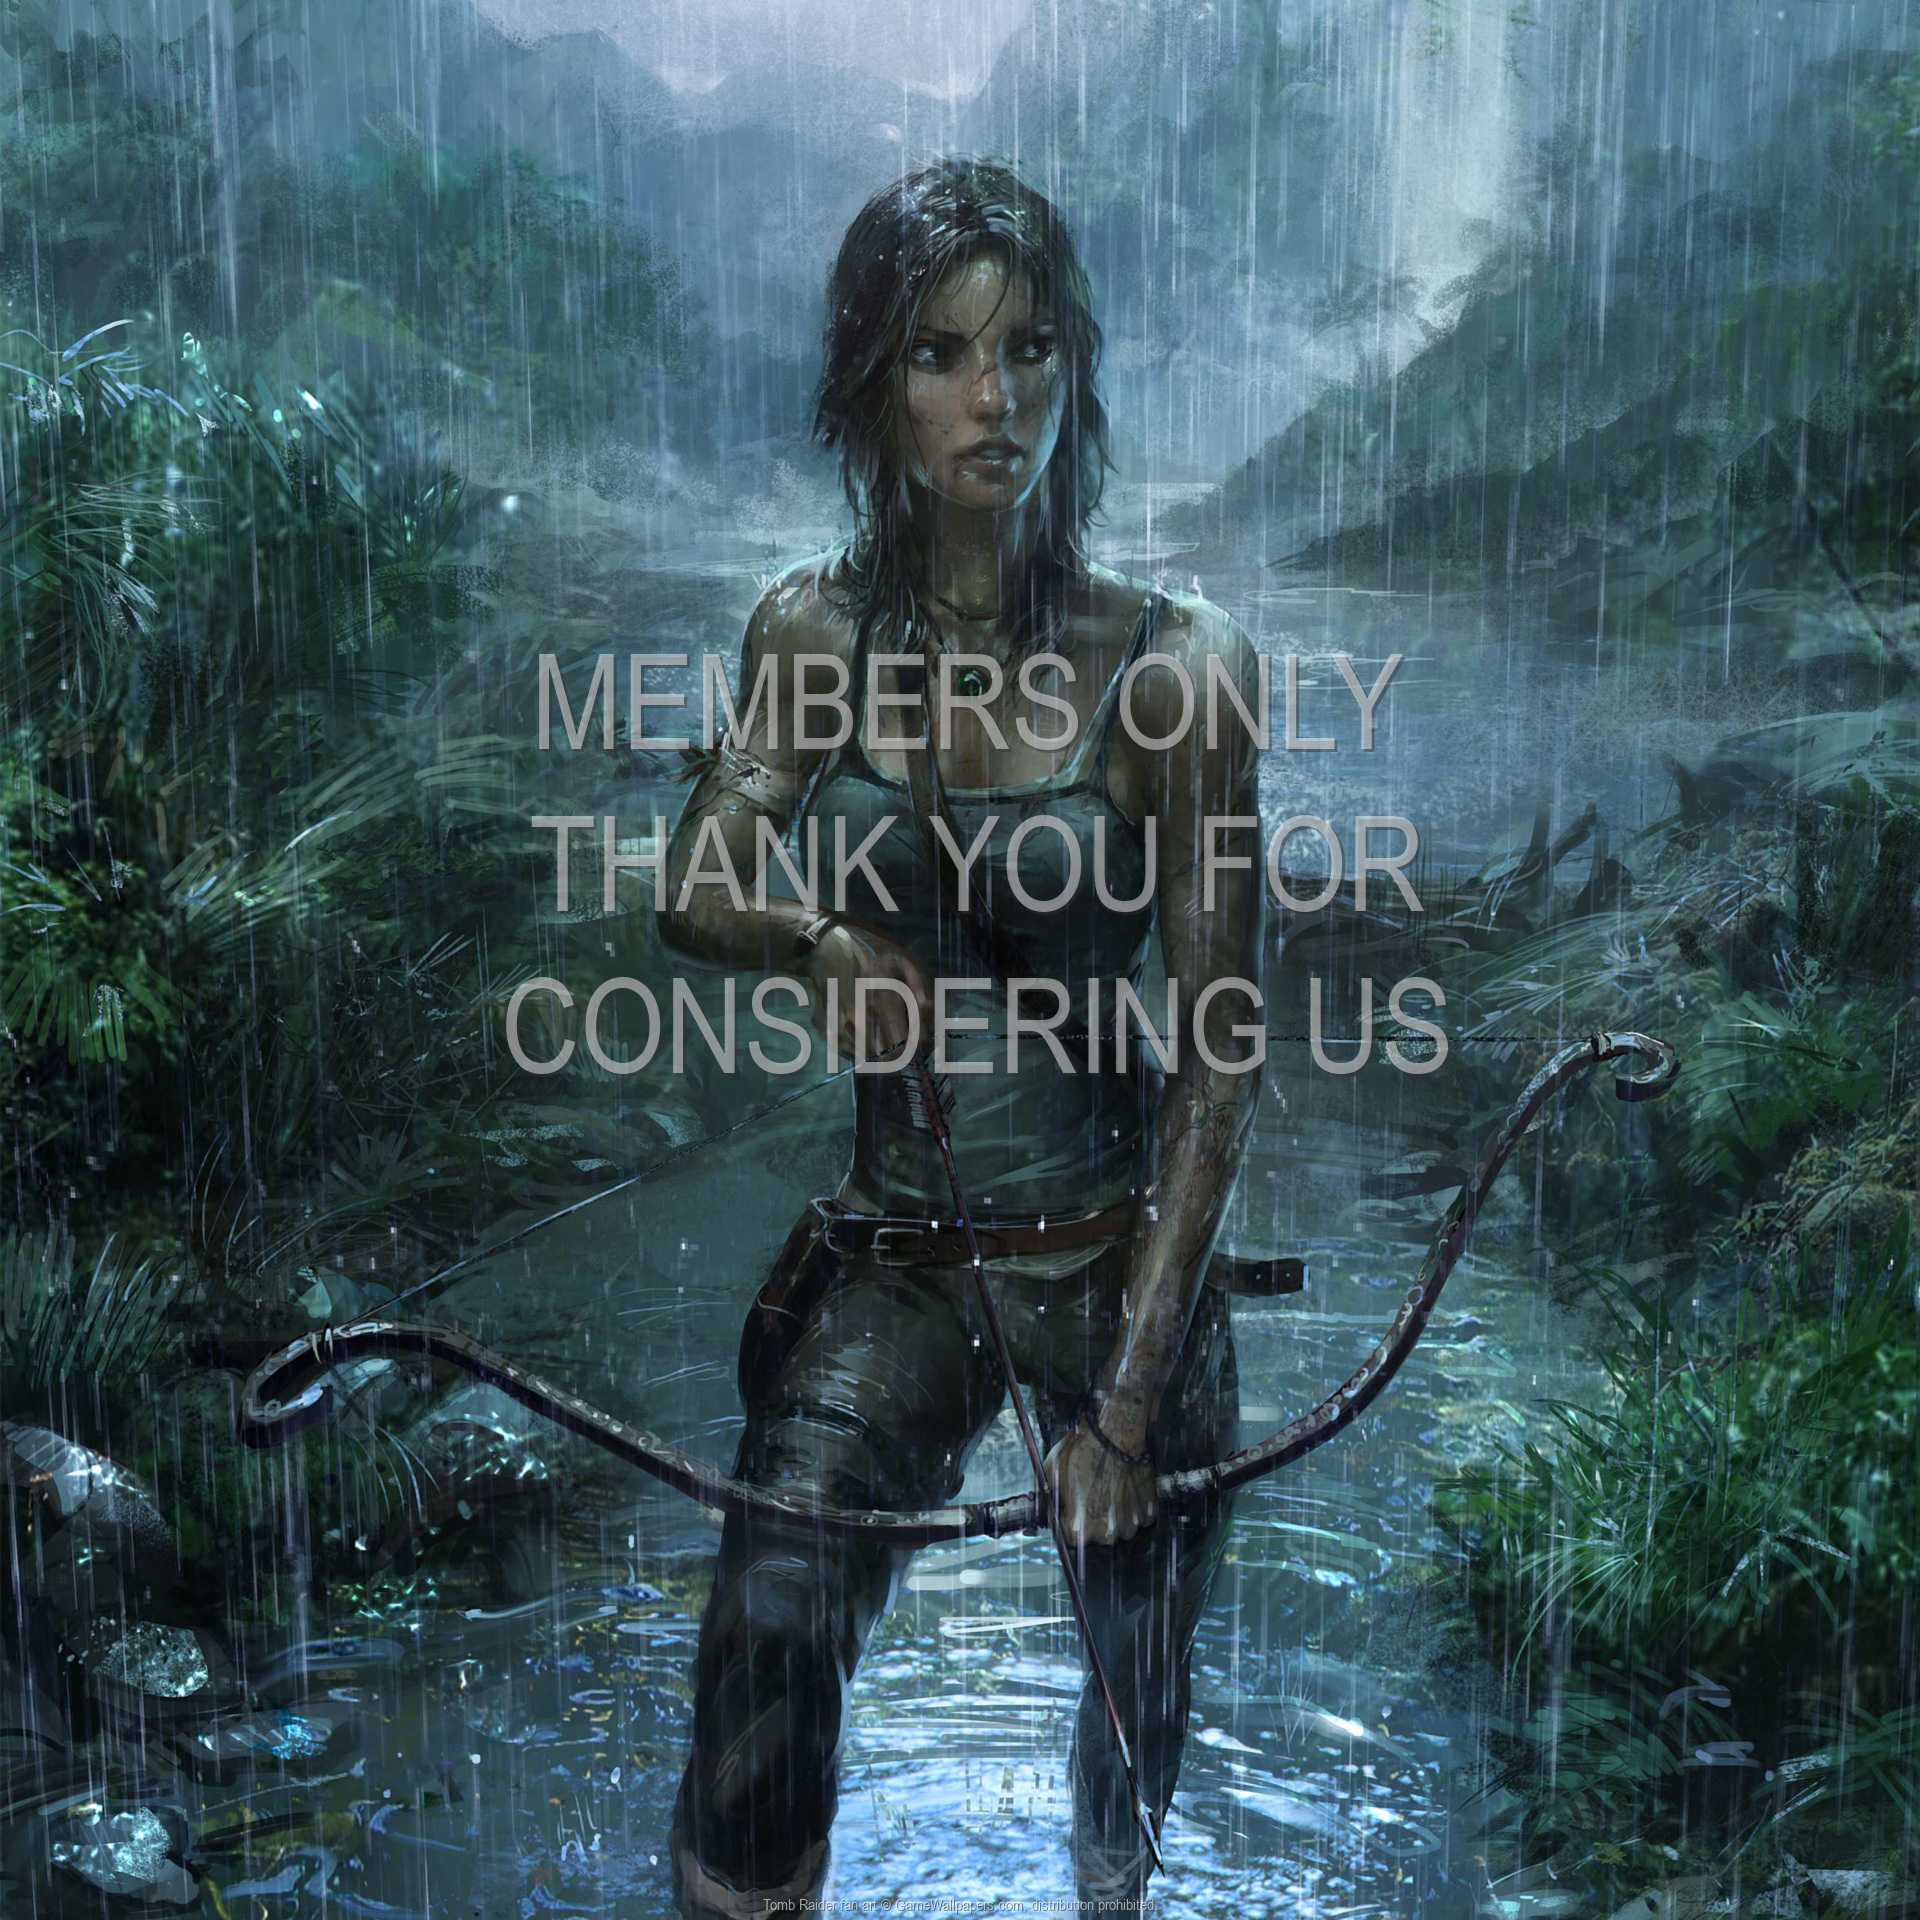 Tomb Raider fan art 1080p Horizontal Mobile wallpaper or background 01